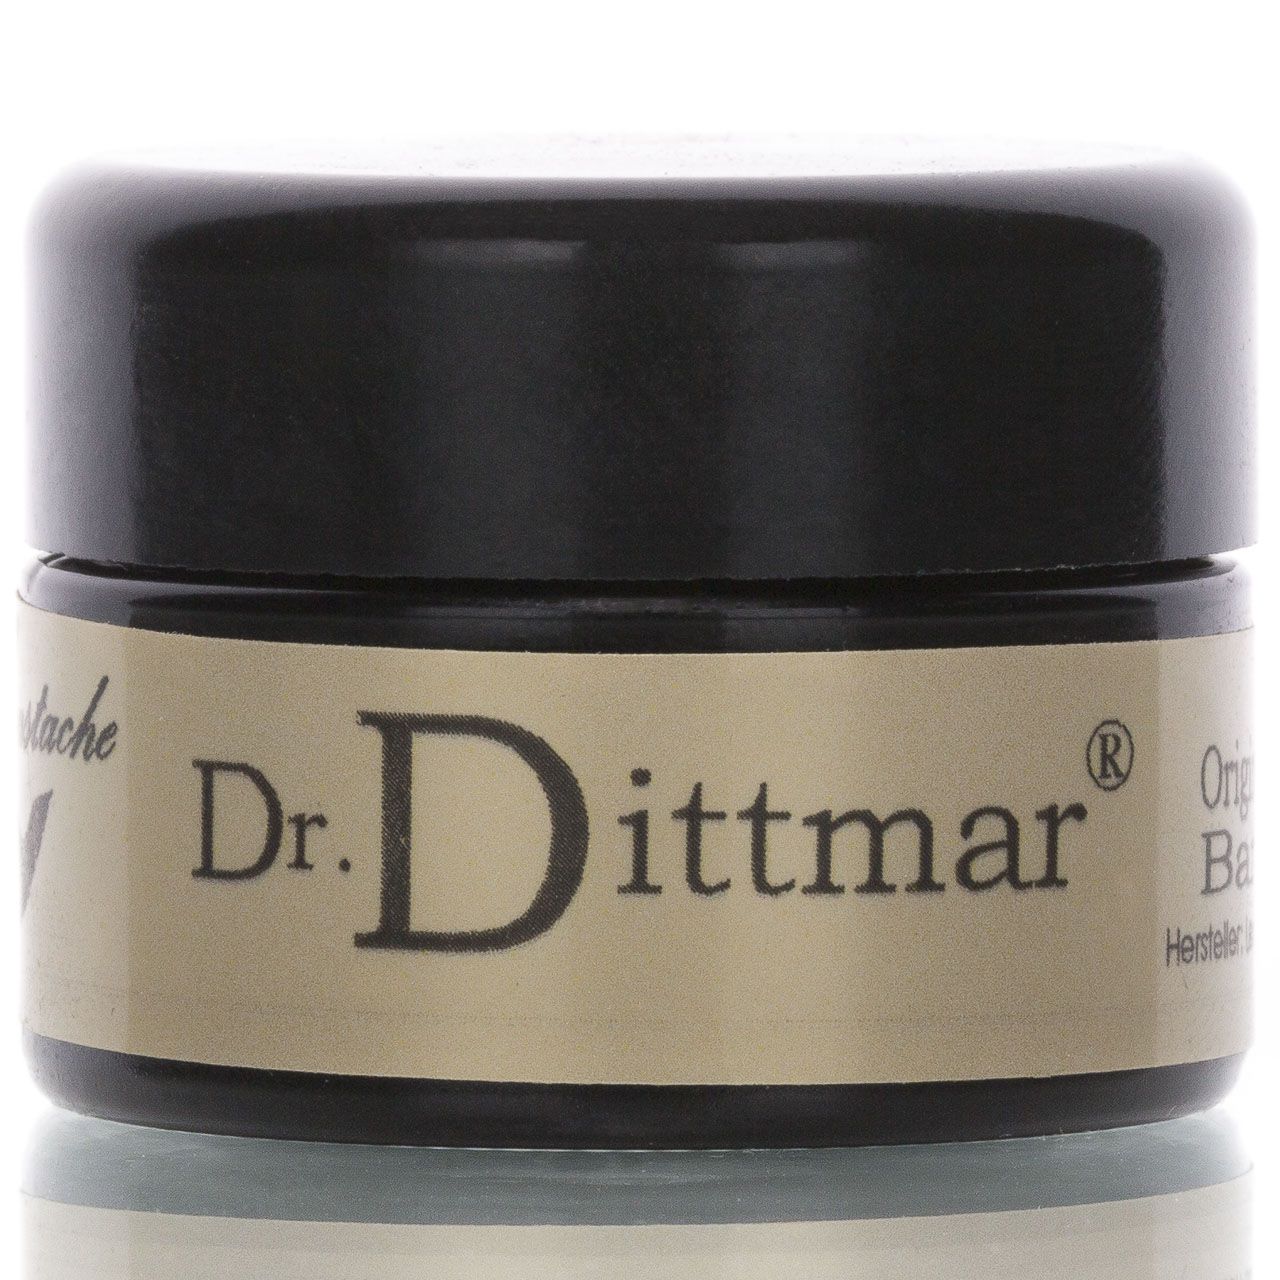 Dr. Dittmar Original ungarische Bartwichse | blackbeards | Bartpflege 16ml